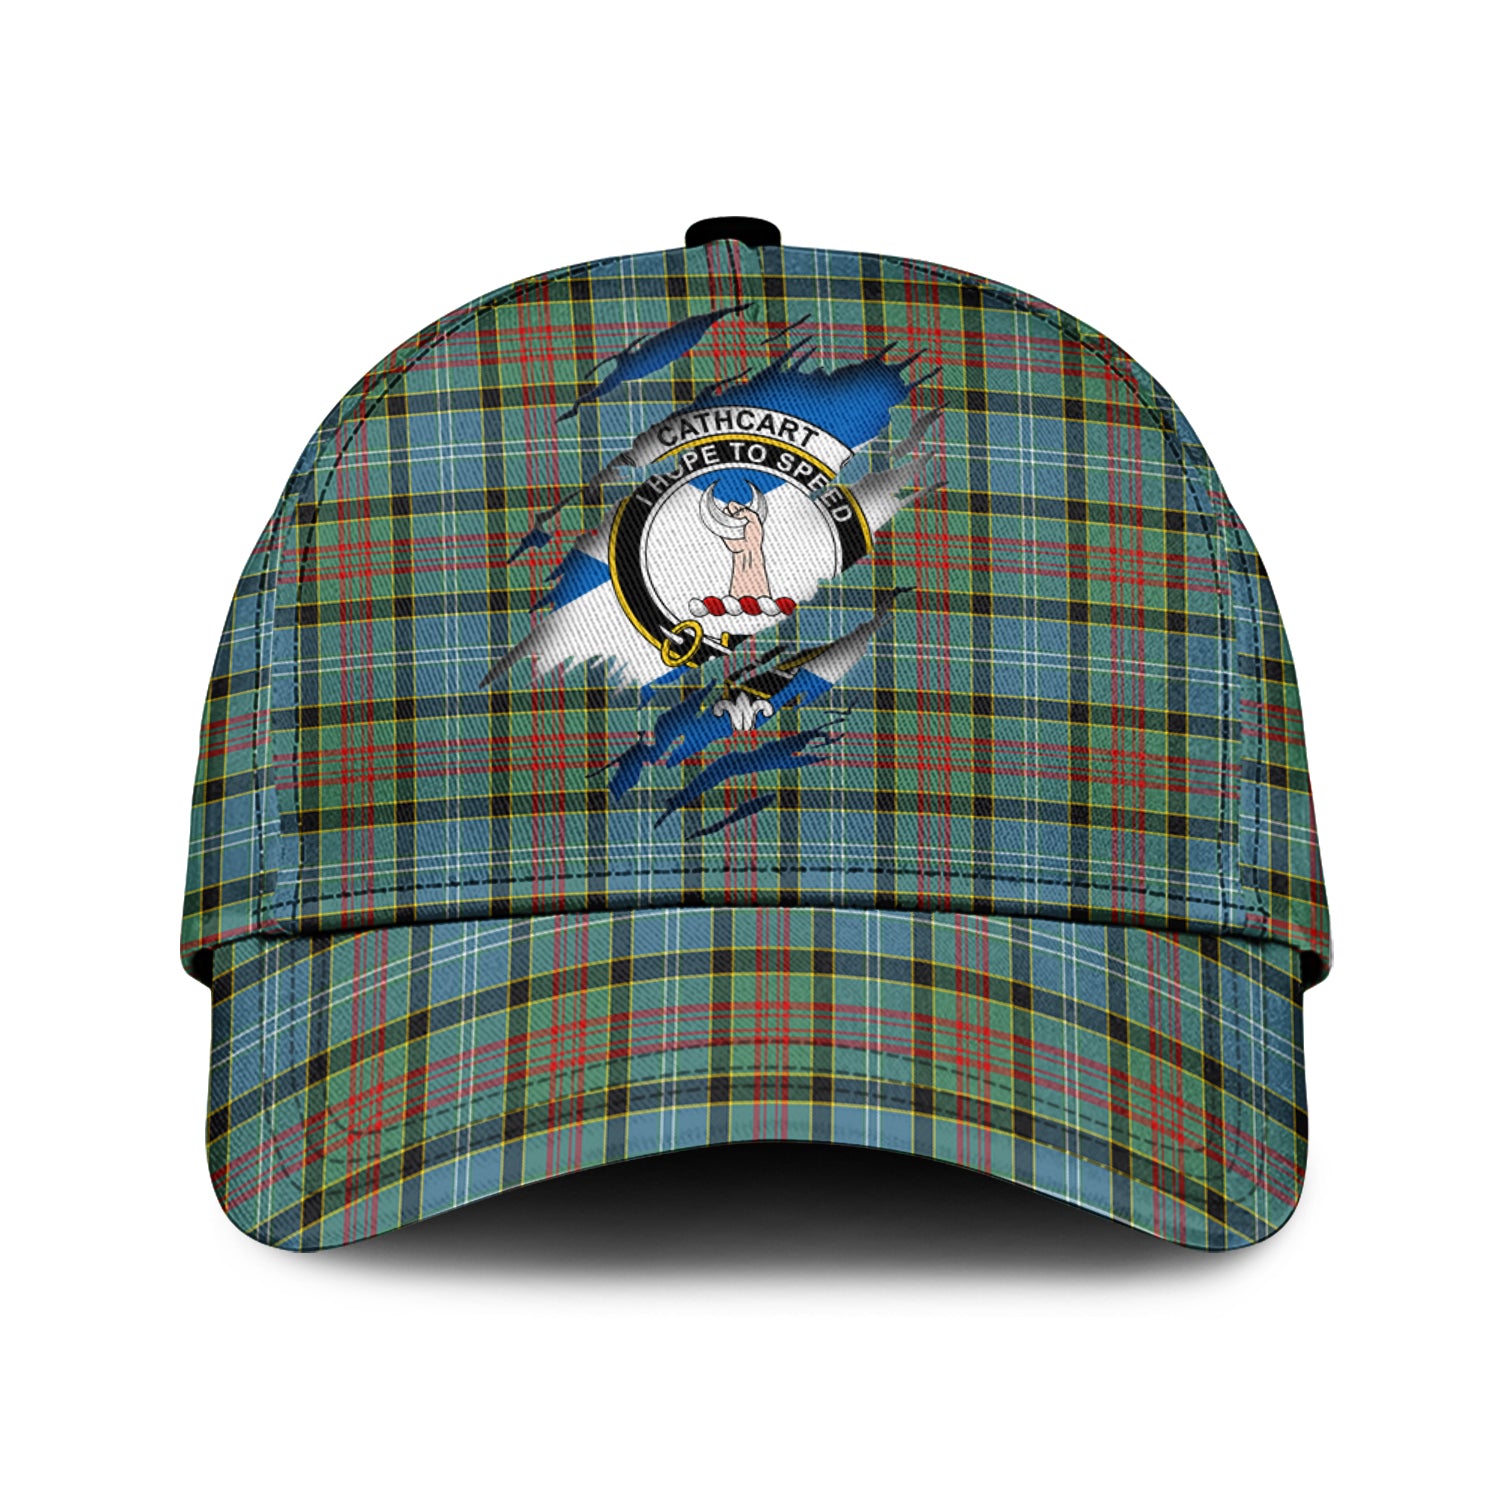 cathcart-tartan-plaid-cap-family-crest-in-me-style-tartan-baseball-cap